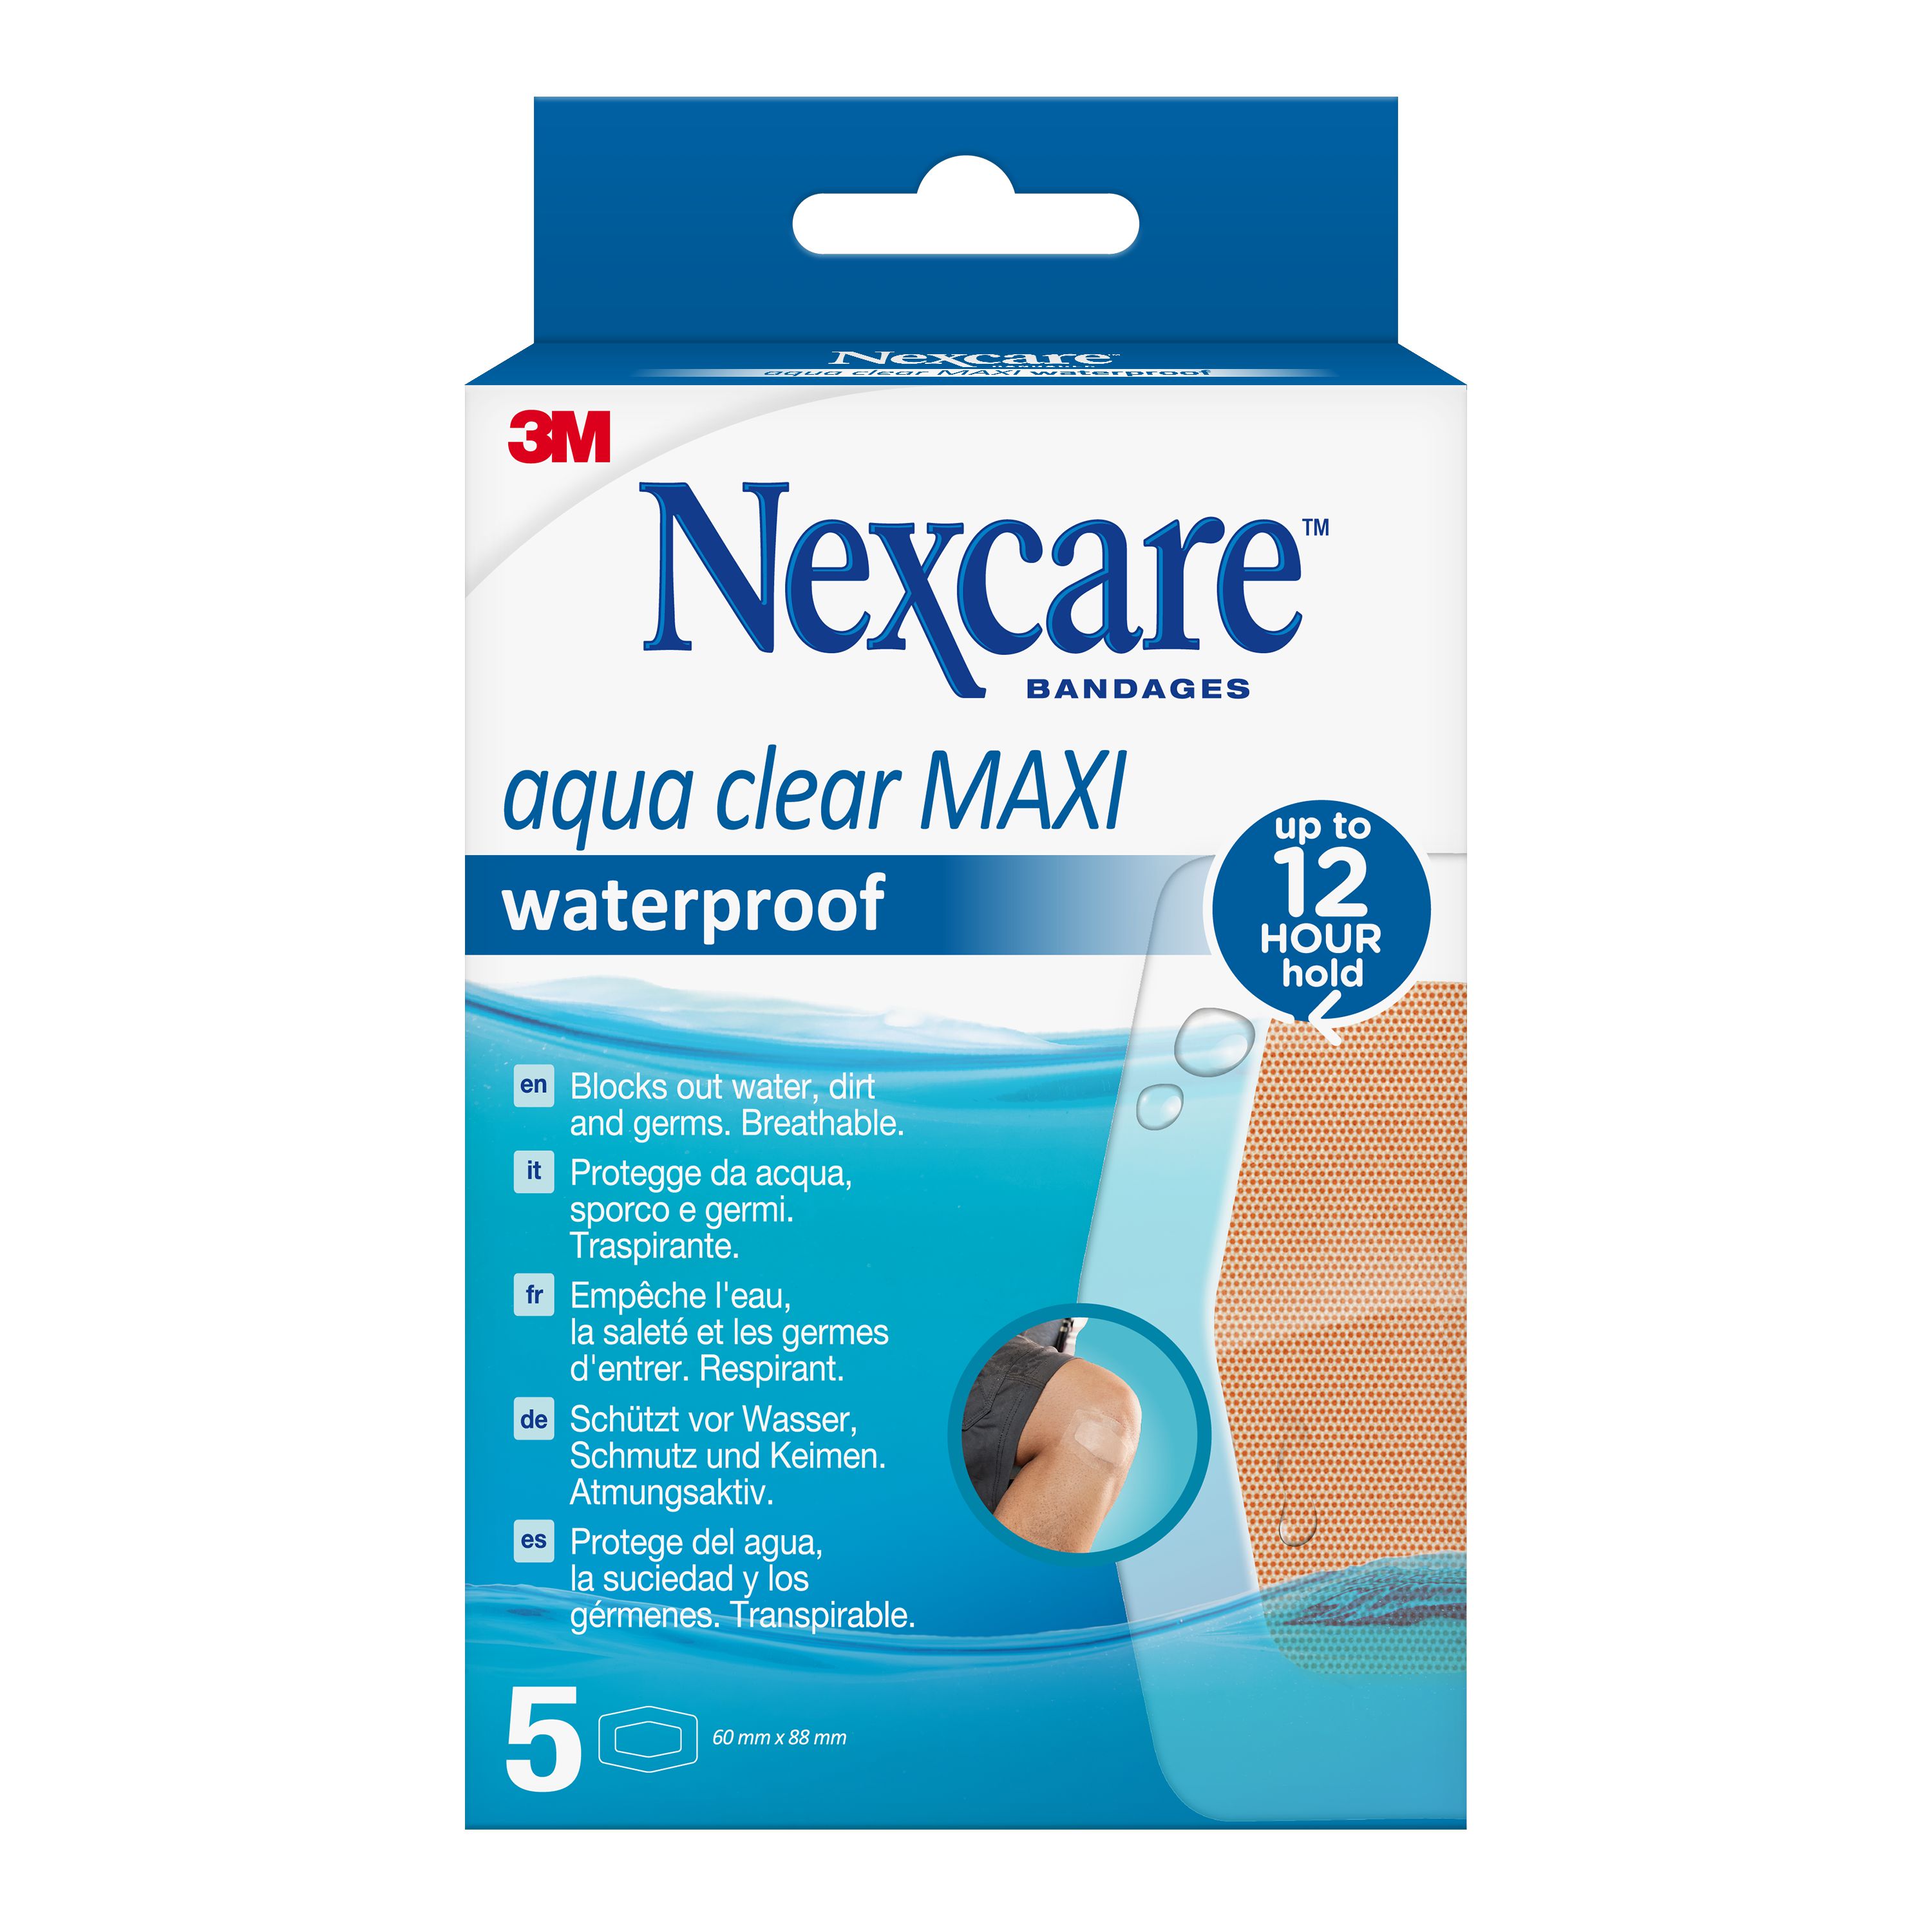 Nexcare™ Aqua Clear MAXI Waterproof Pflaster, 60 mm x 88 mm, 5/Pack